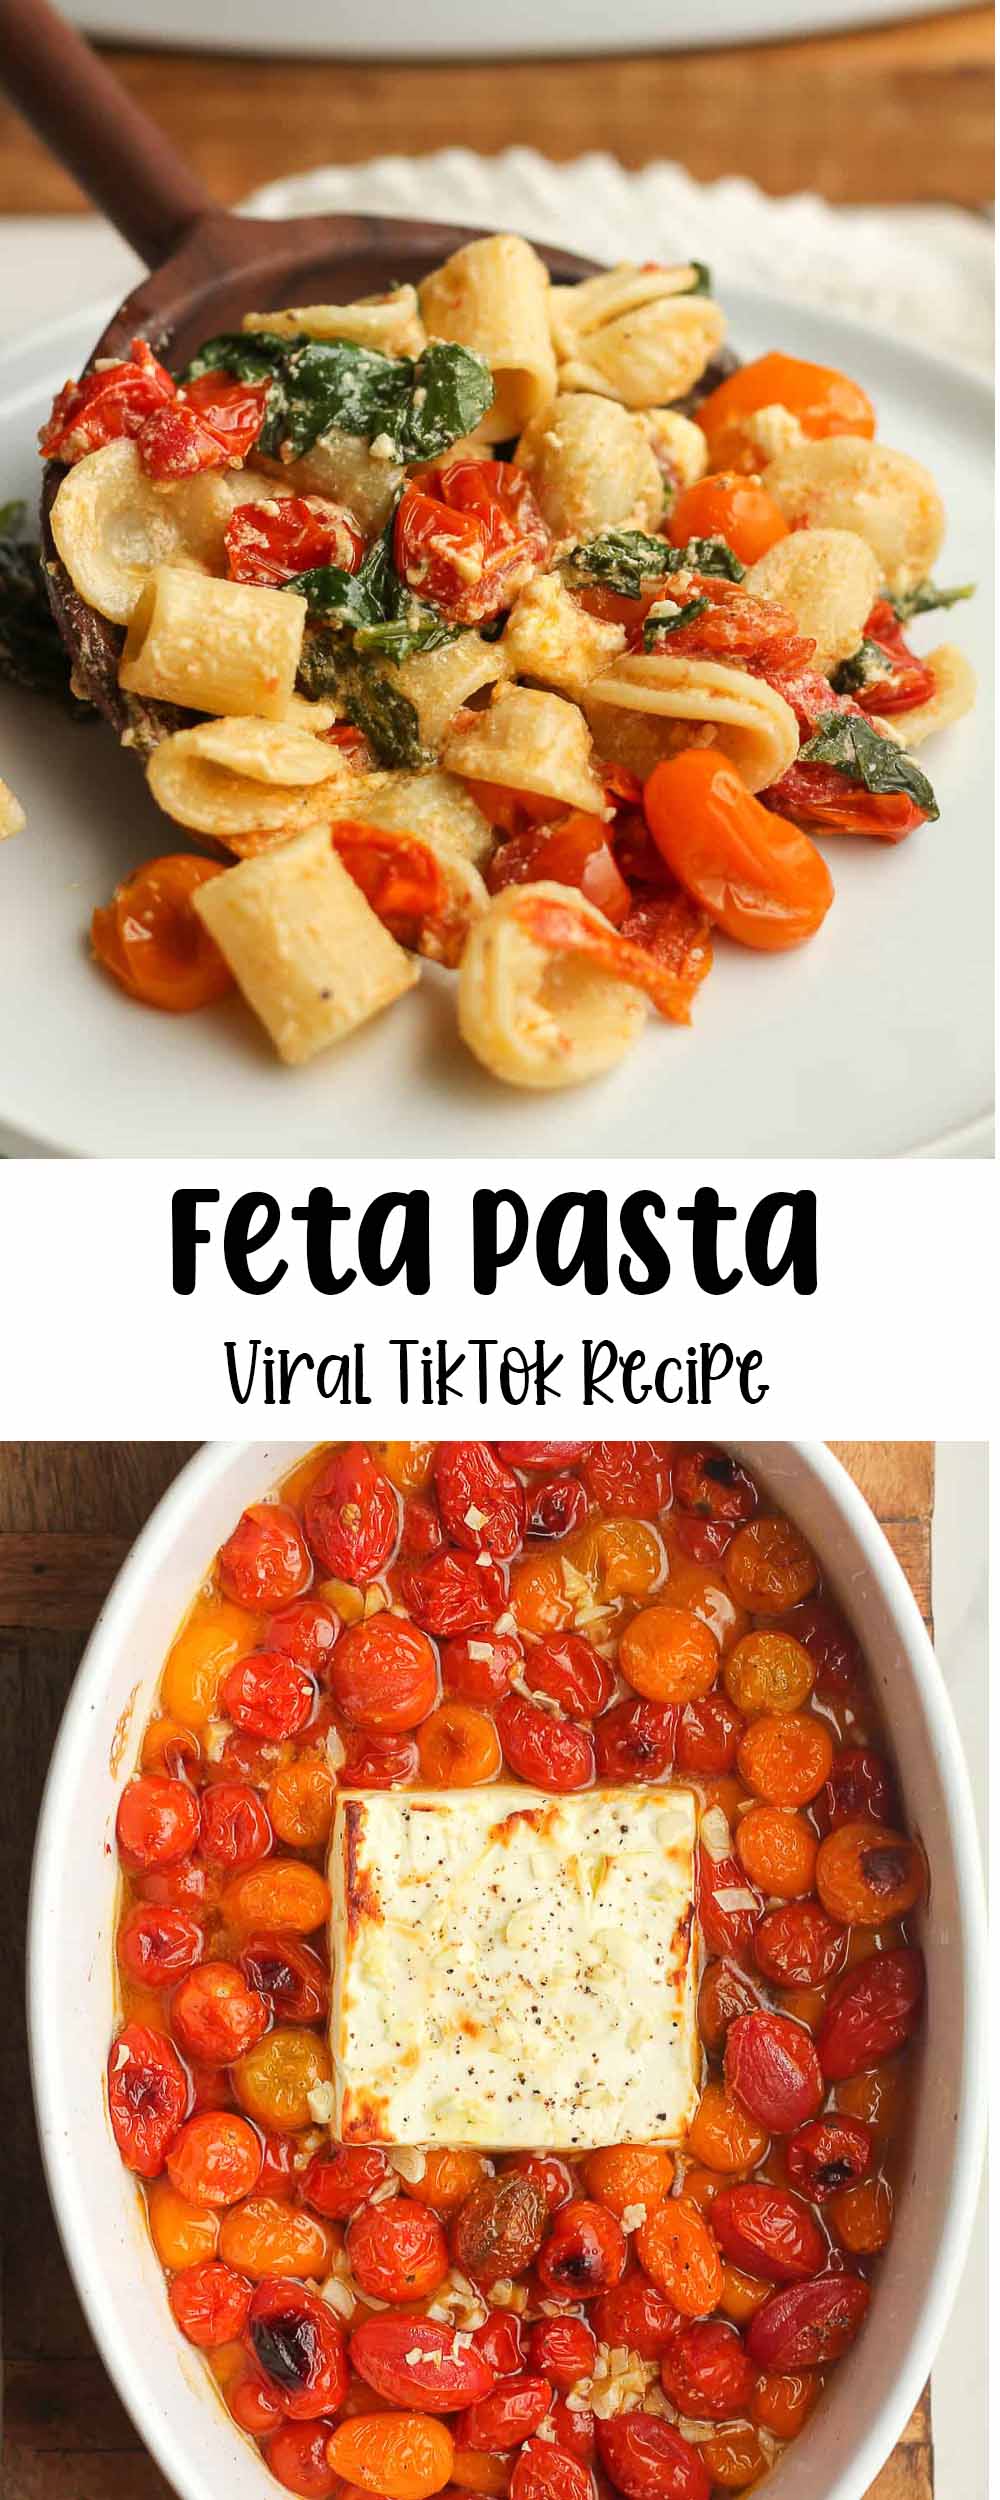 A collage of photos for feta pasta, the viral Tiktok recipe.